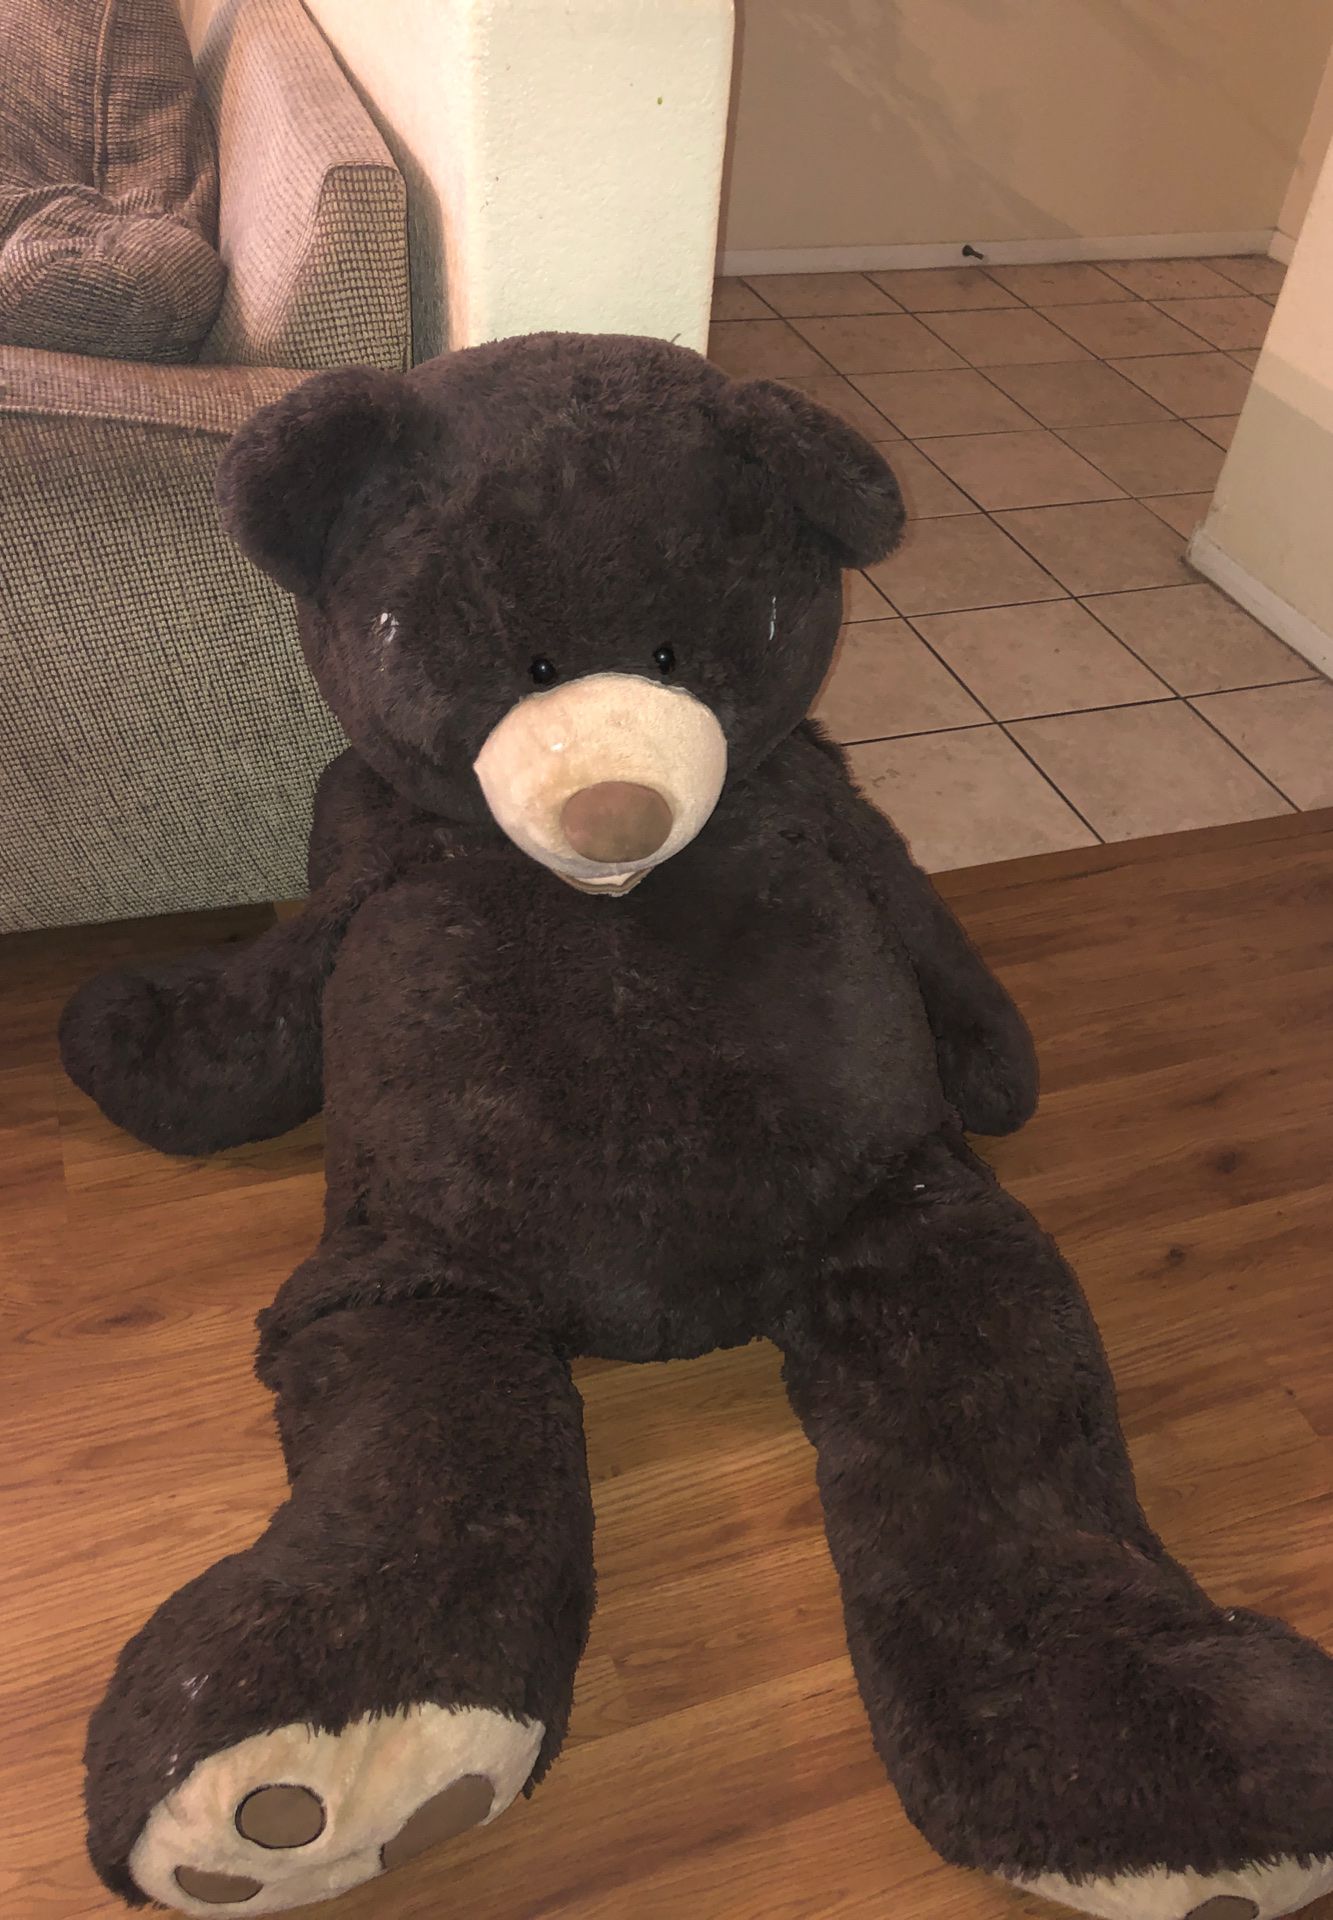 Giant stuffed bear